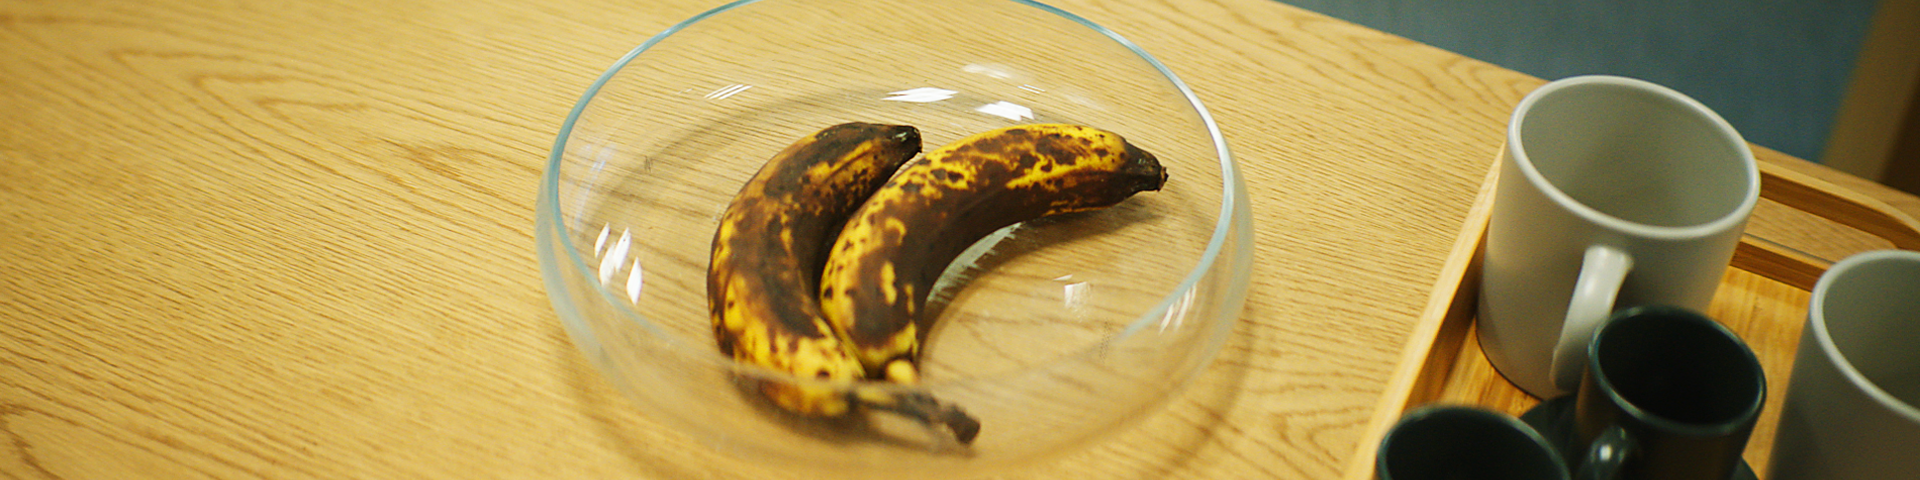 Gamla bananer